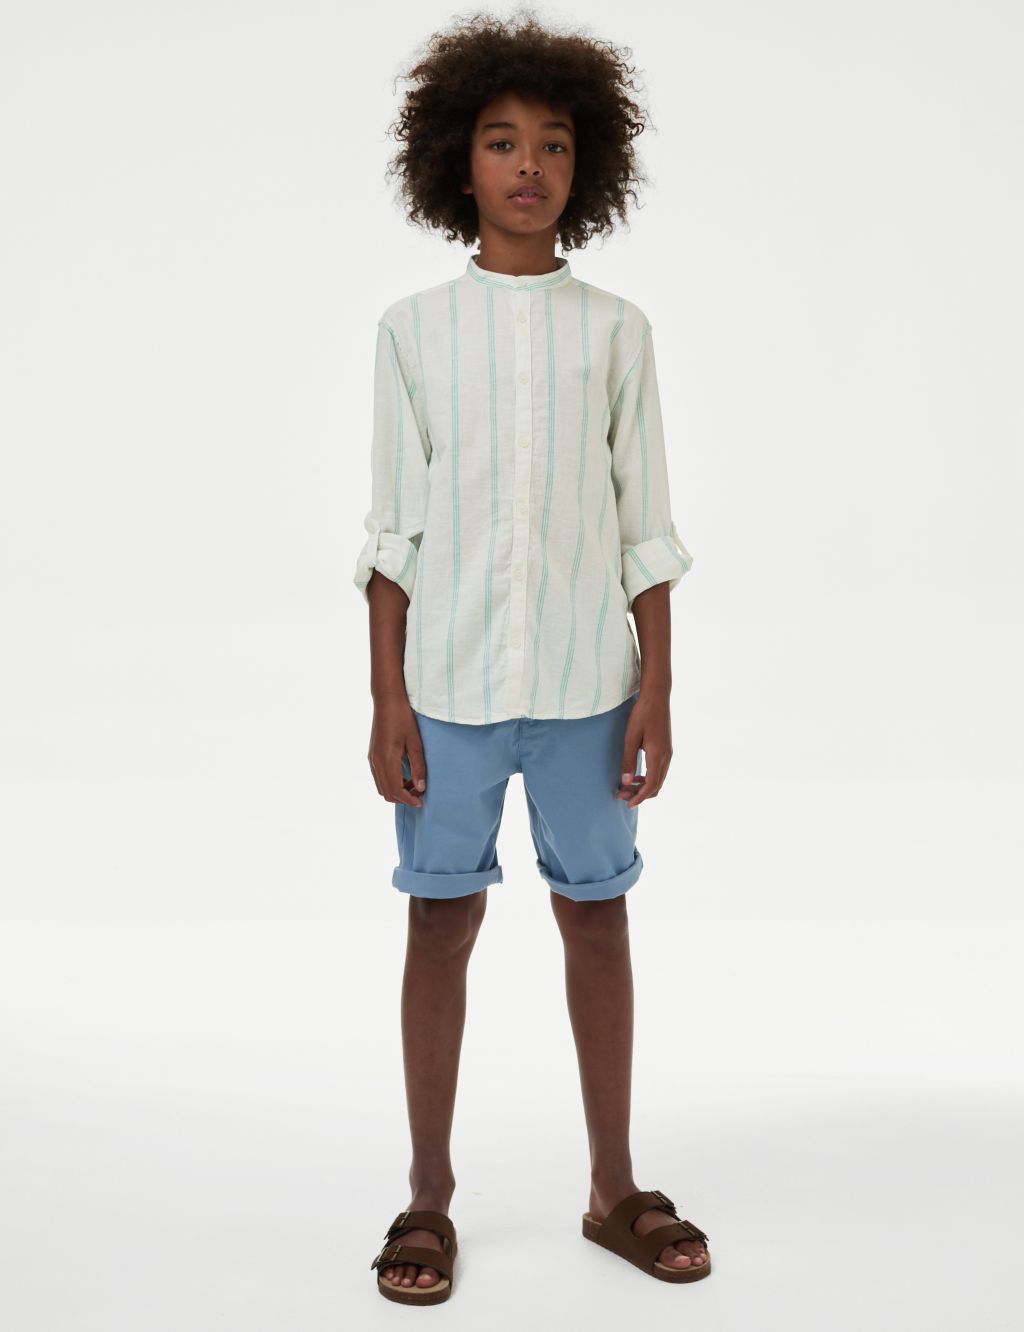 Cotton Rich Striped Shirt (6-16 Yrs) 2 of 4